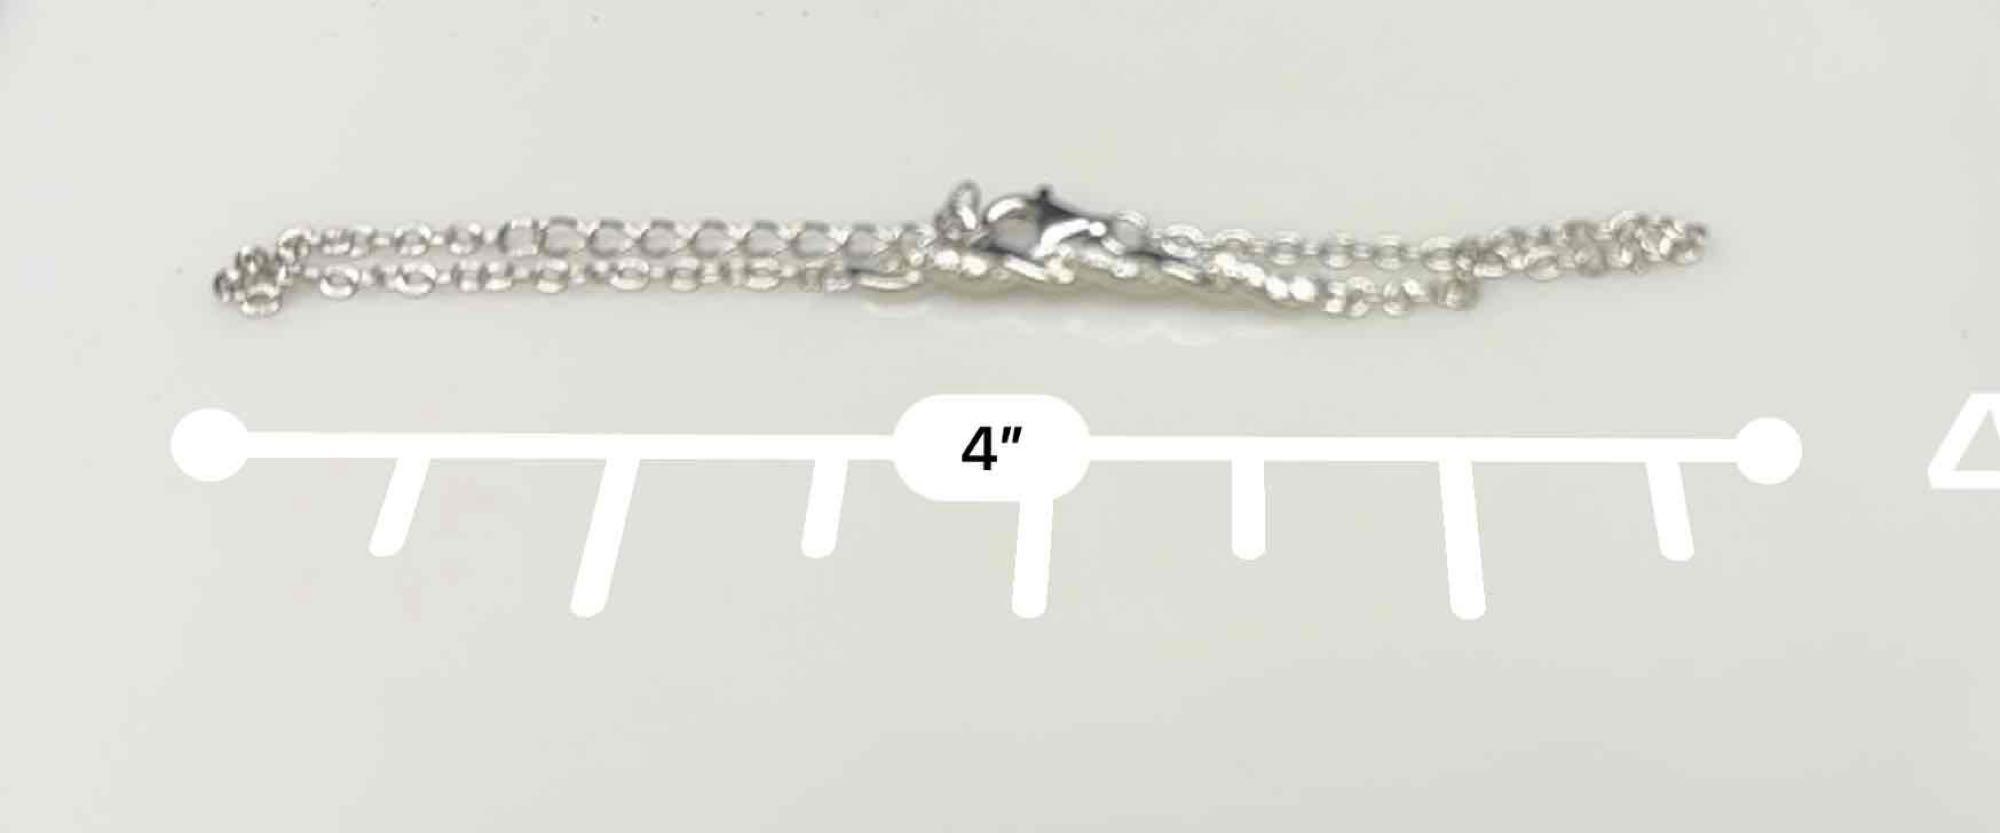 S925 Sterling Silver Bracelet with Moissanite Diamonds GRA Certificate 1.9g